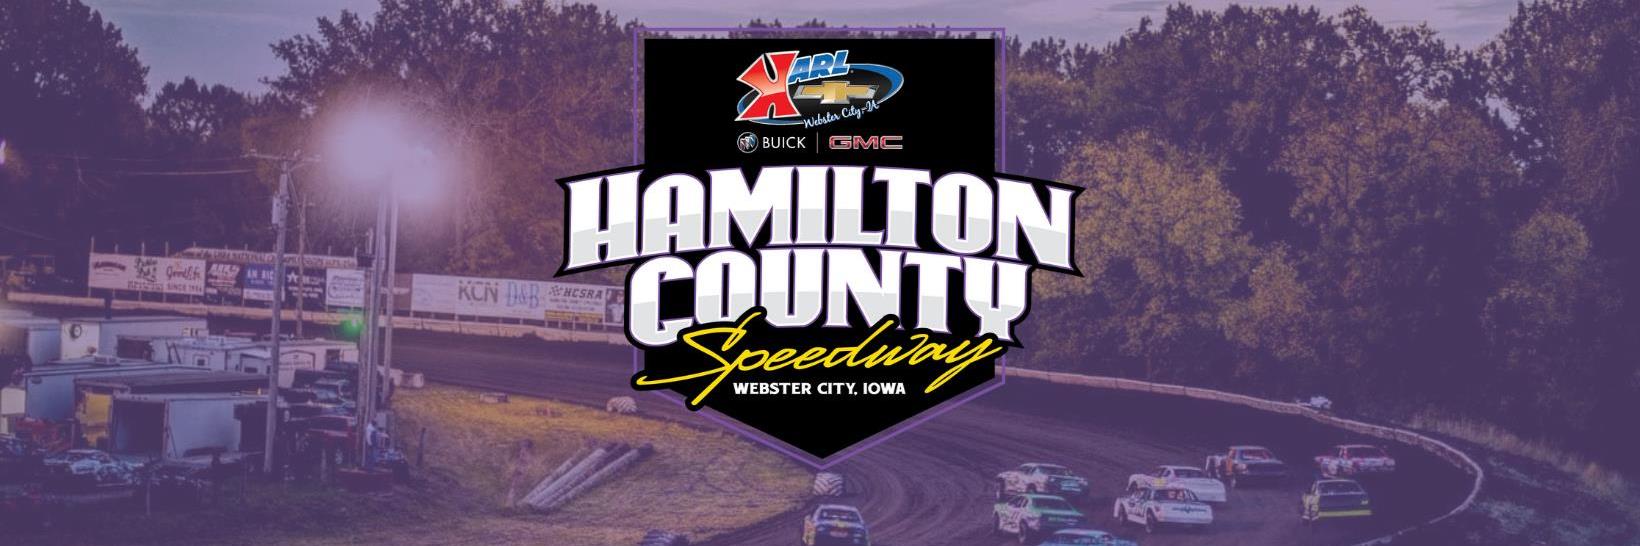 7/23/2022 - Hamilton County Speedway